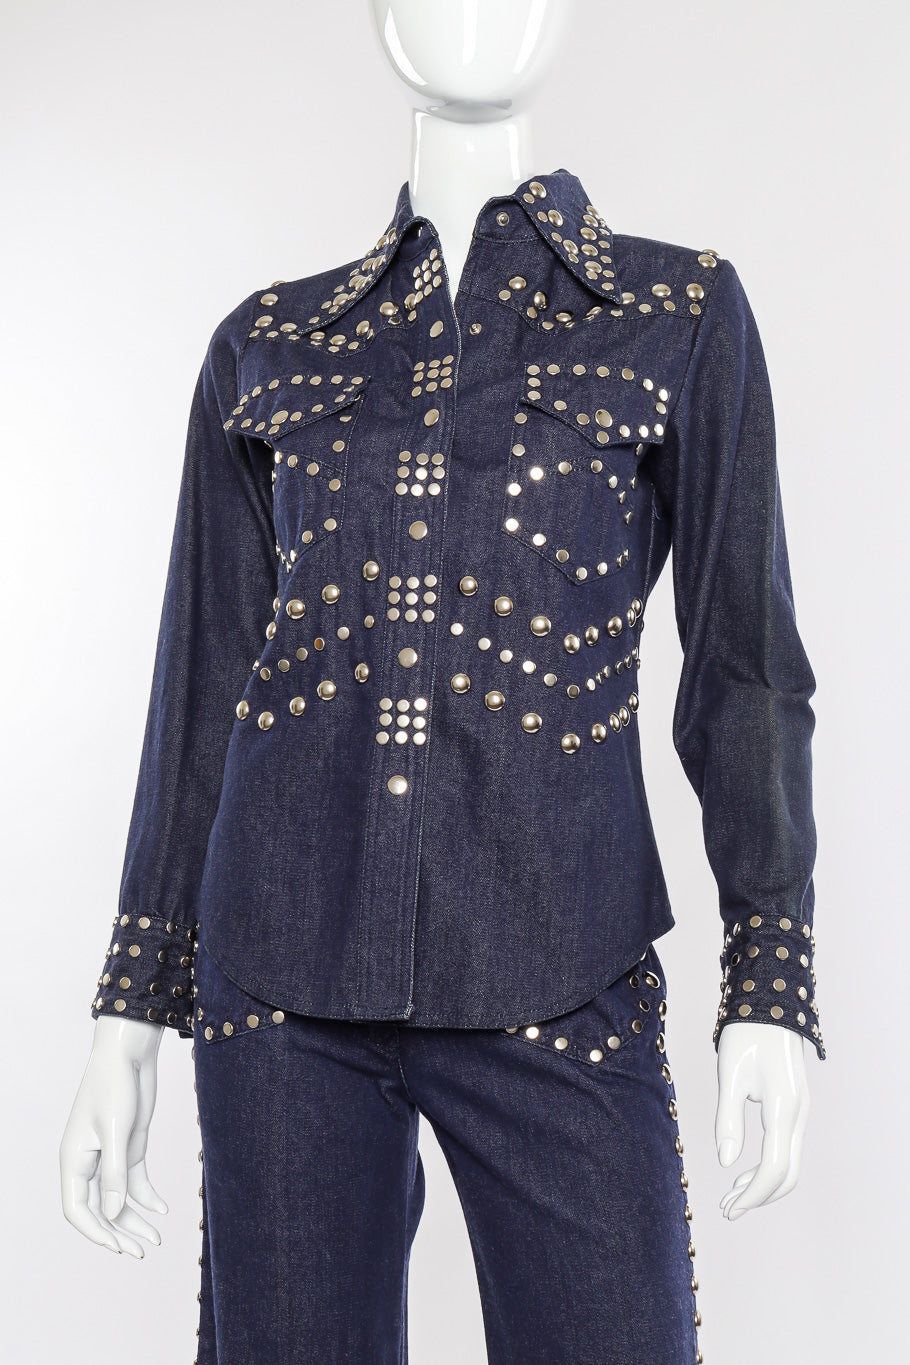 Vintage Allie Flynn Studded Denim Top and Pant Set front view of shirt on mannequin closeup @Recessla